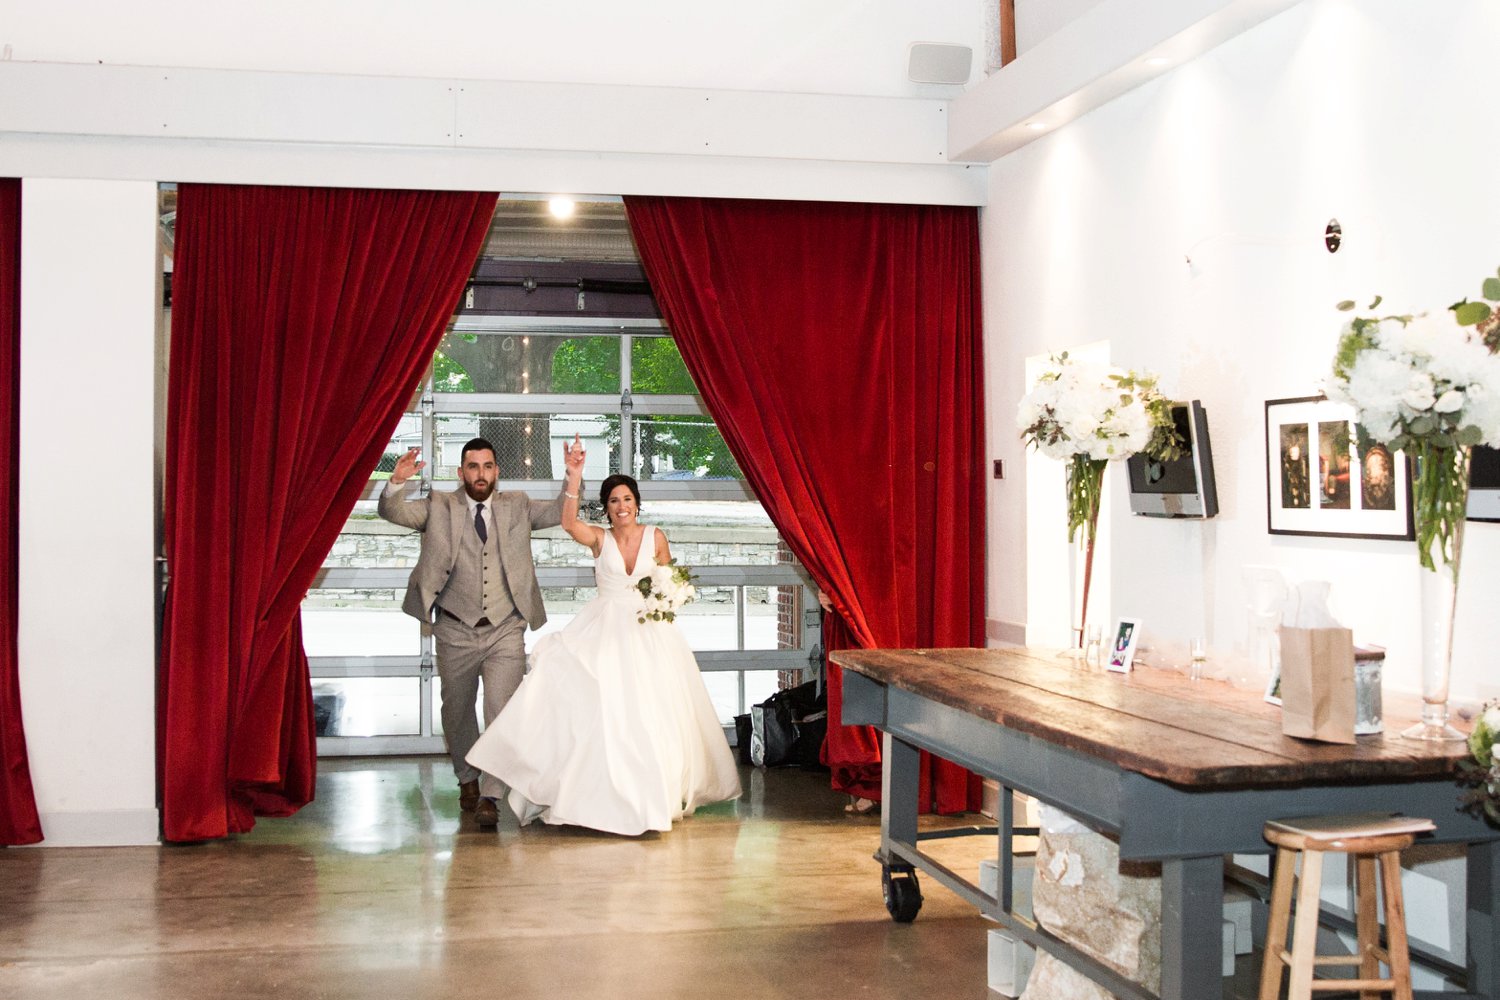  images by feliciathephotographer.com | destination wedding photographer | kansas city | spring time | reception | grand entrance | vox theatre | red curtains | a line gown | grey suit | davids bridal | the black tux | 